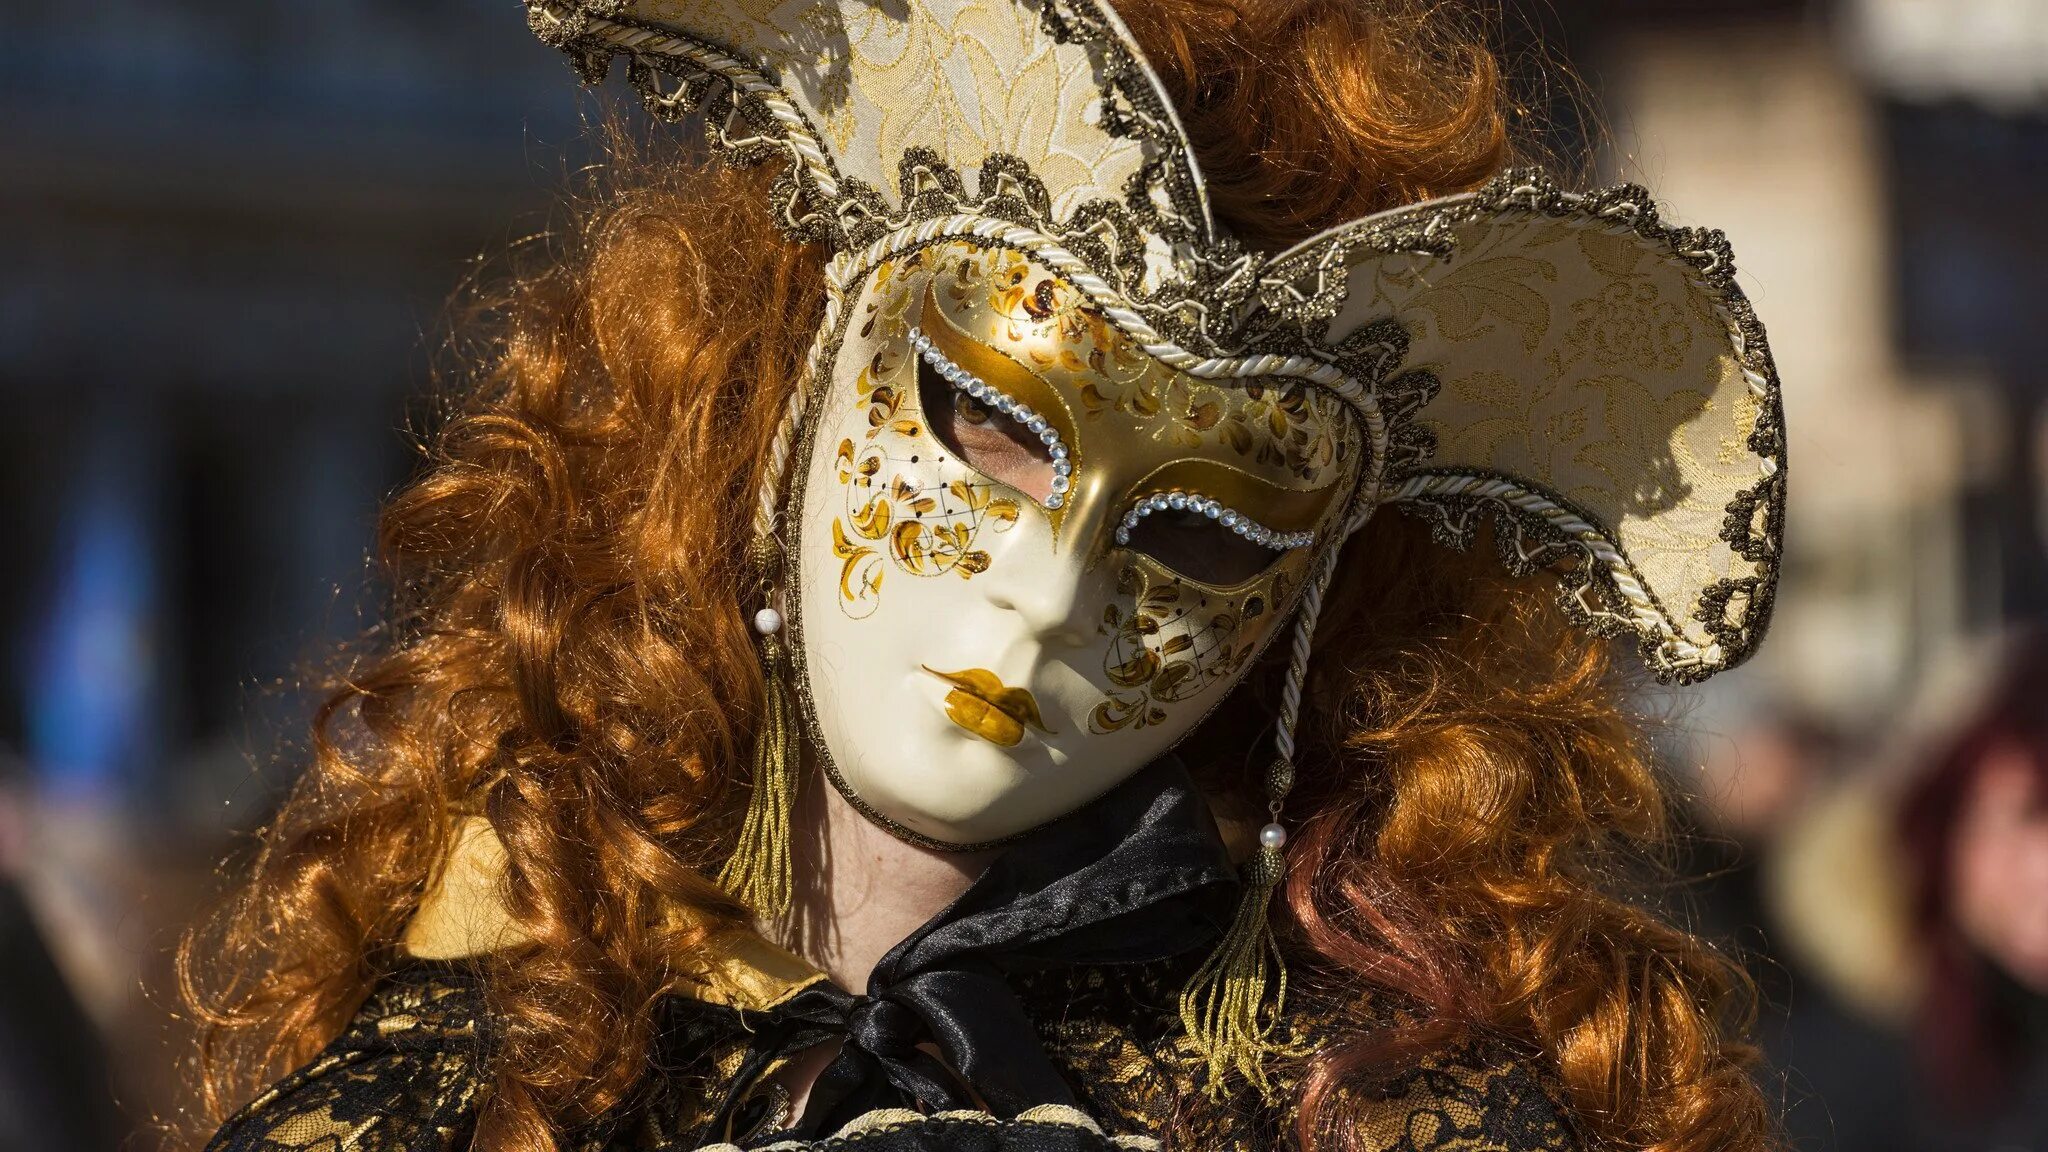 Венецианская дама (dama di Venezia). Маски венецианские карнавальные. Карнавальная маска Венеция. Венецианский карнавал костюмы. Карнавальный человек